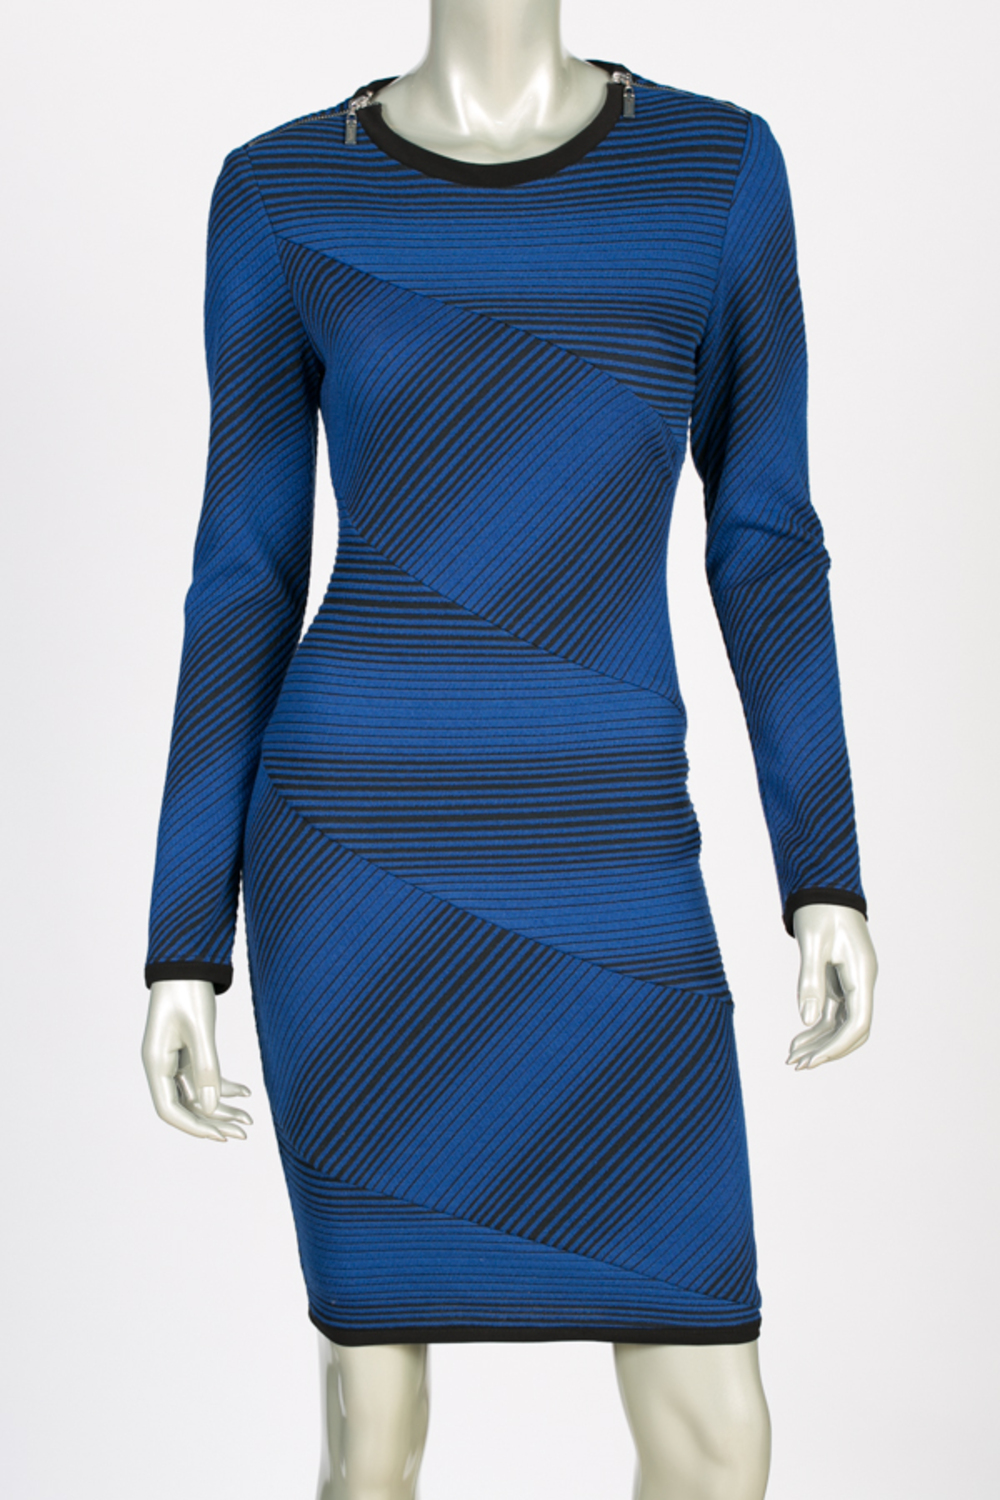 Joseph Ribkoff dress style 144900. Blue/black